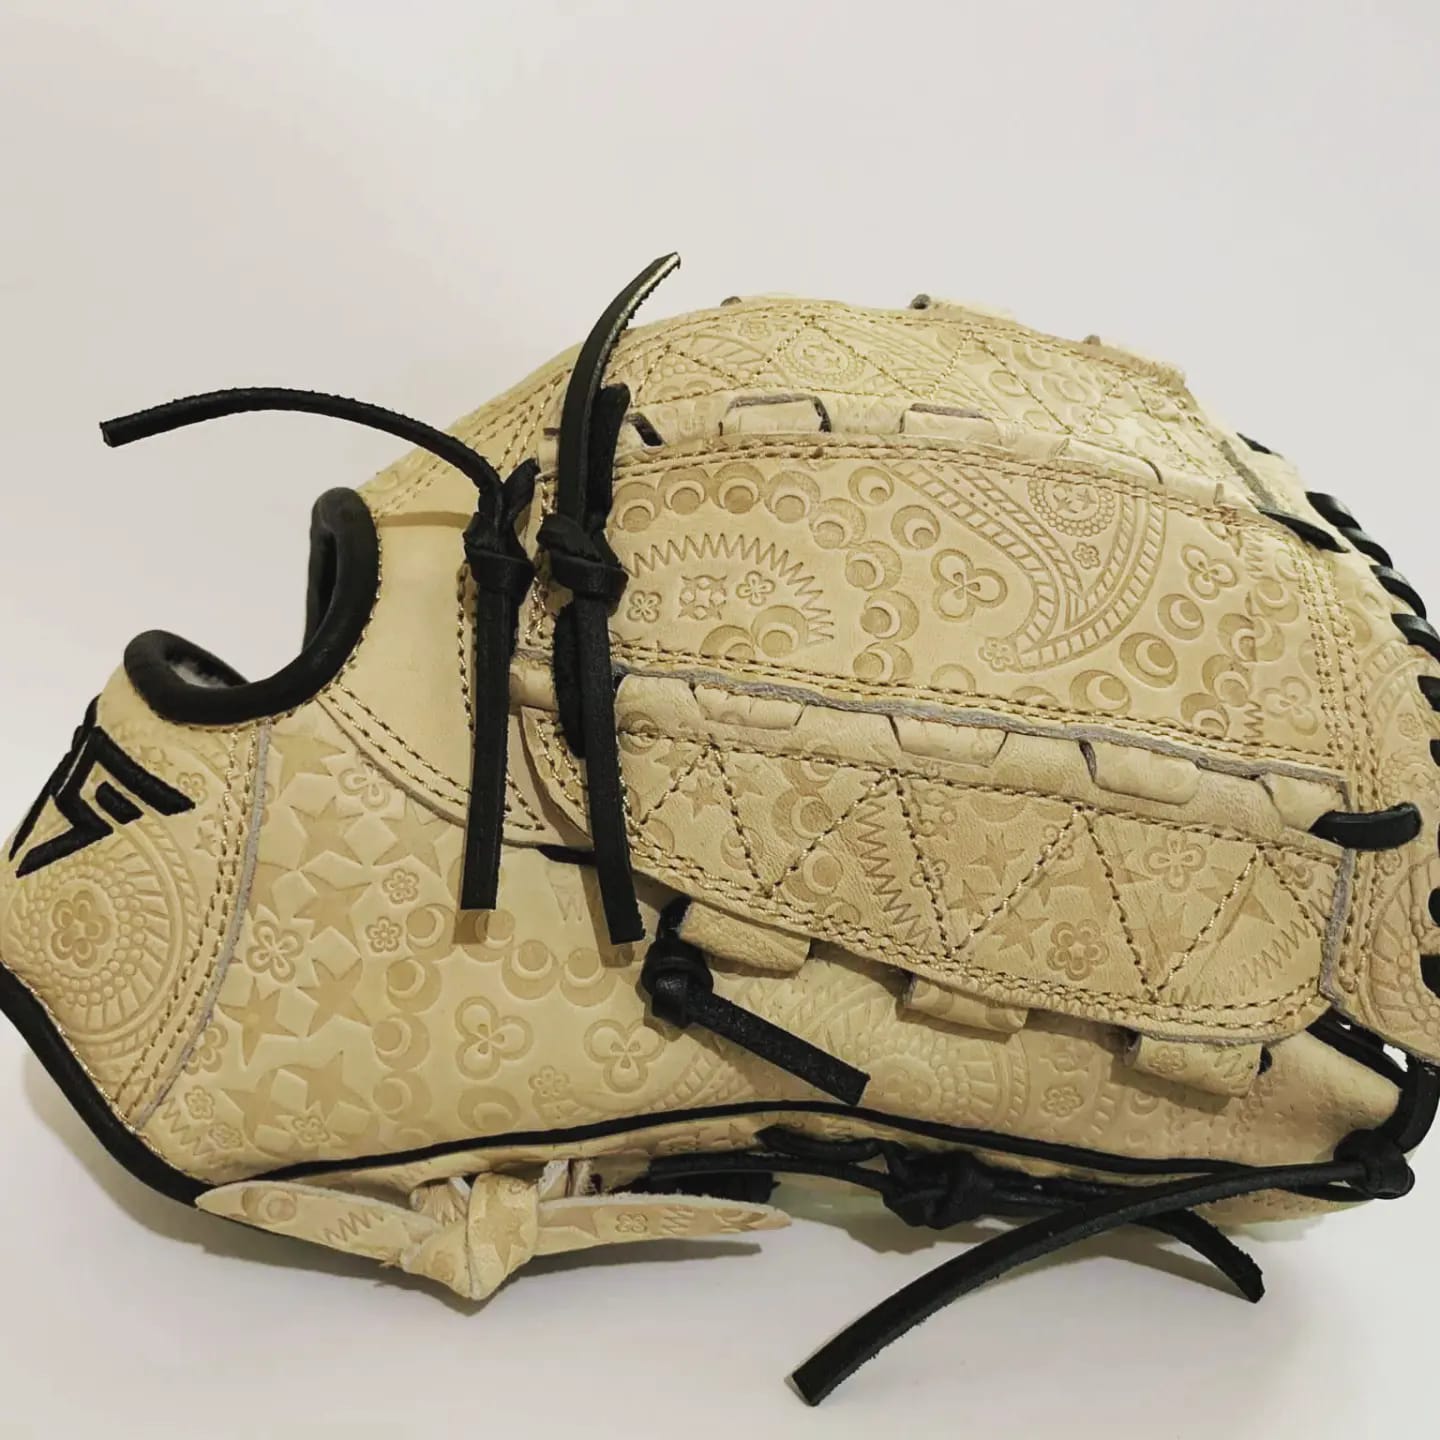 Baseball Glove Leather Types